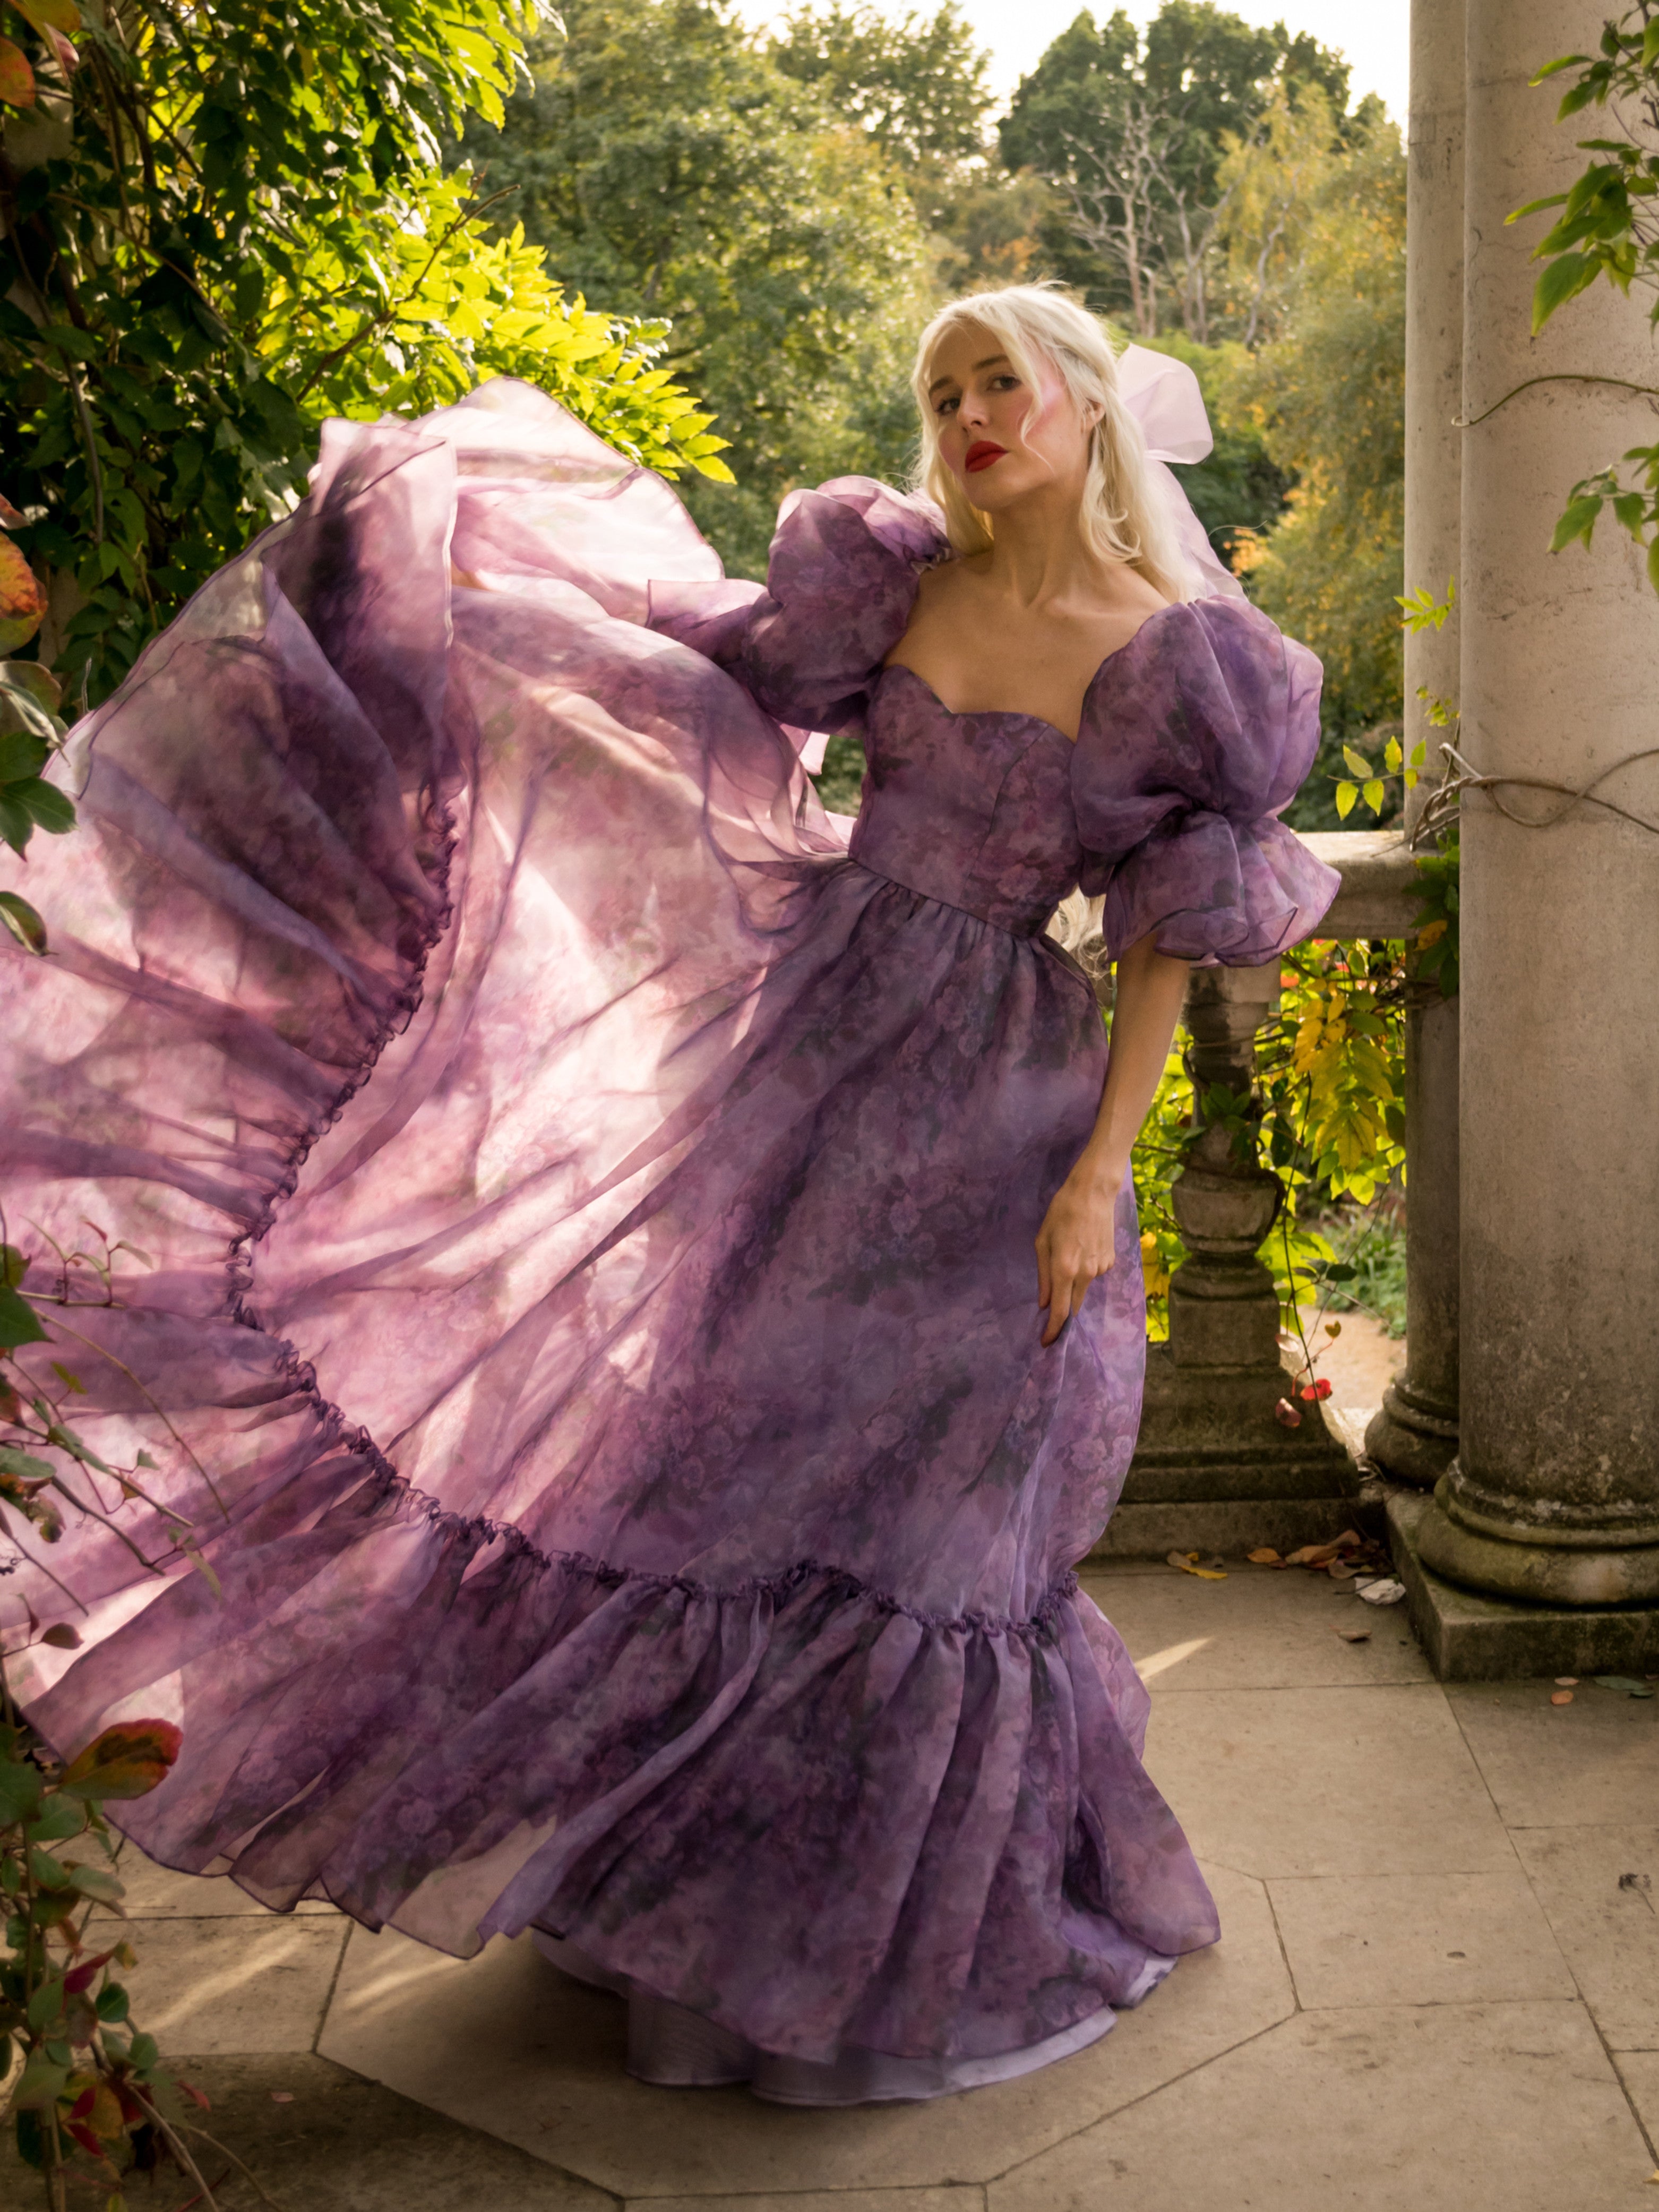 PHOTOS: A Dress Made Of 9,999 Roses | Dress, Rose dress, Dress making